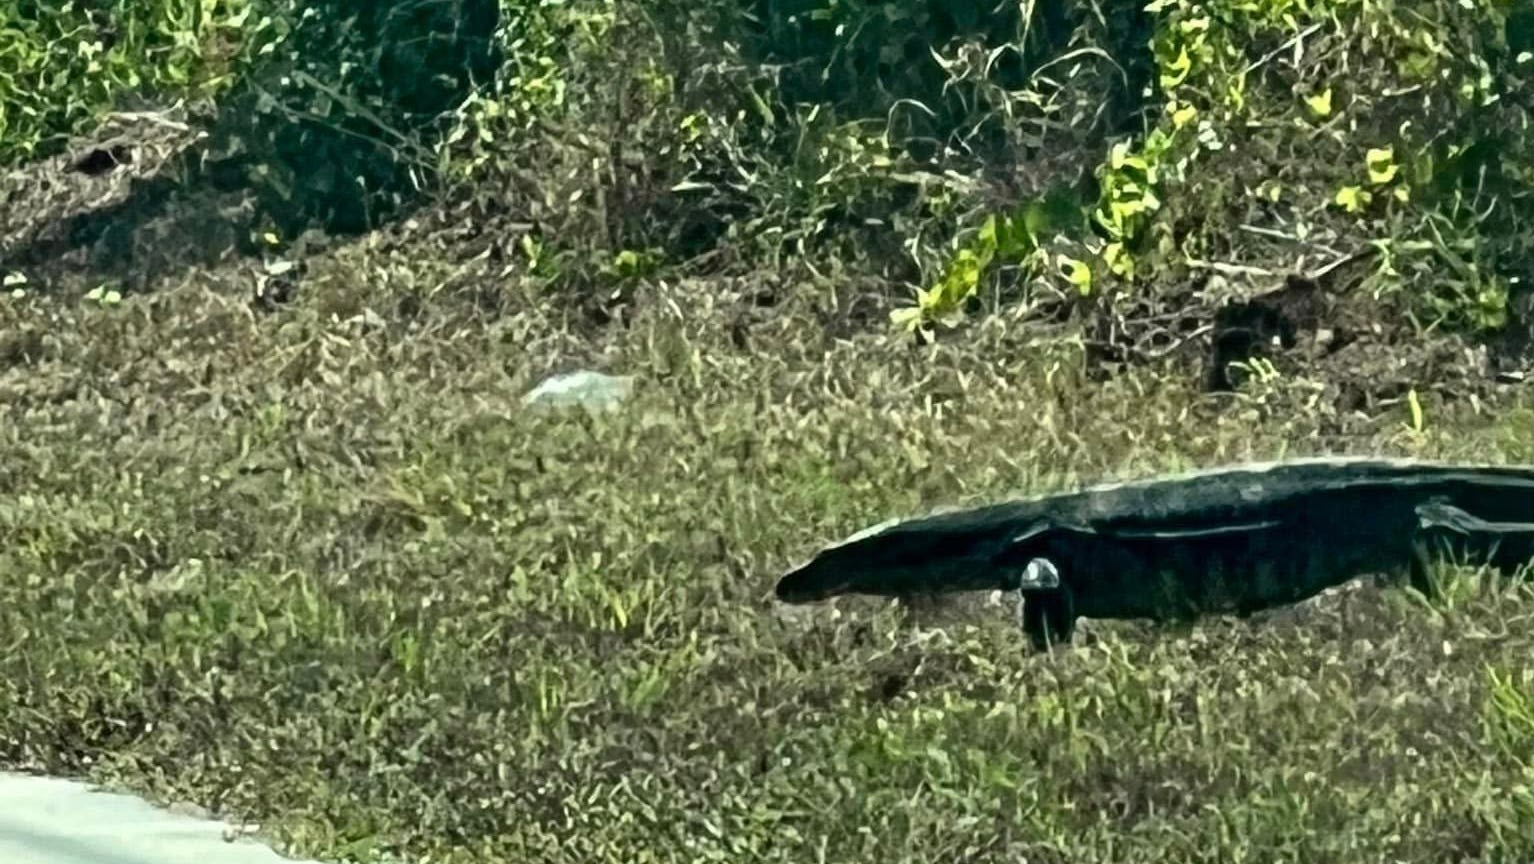 'Stay in the car:' It wasn't a gator or iguana. Woman videos 'huge' monitor lizard near Florida road